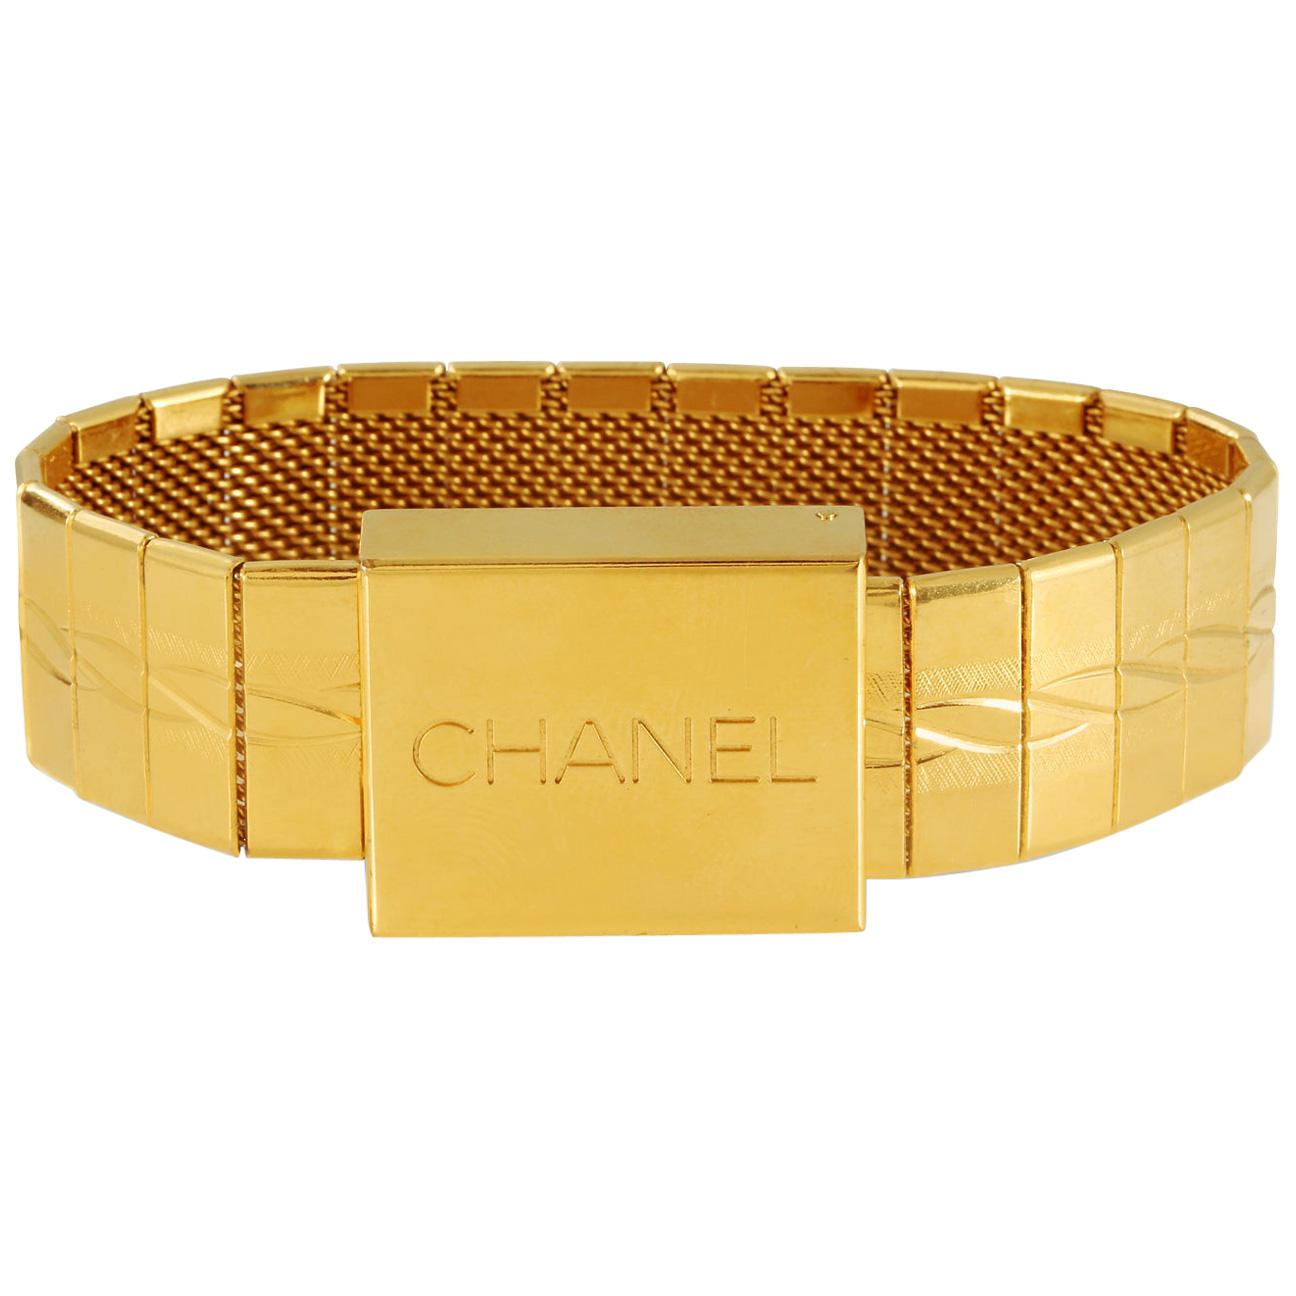 Chanel Gold Watch Band Bracelet